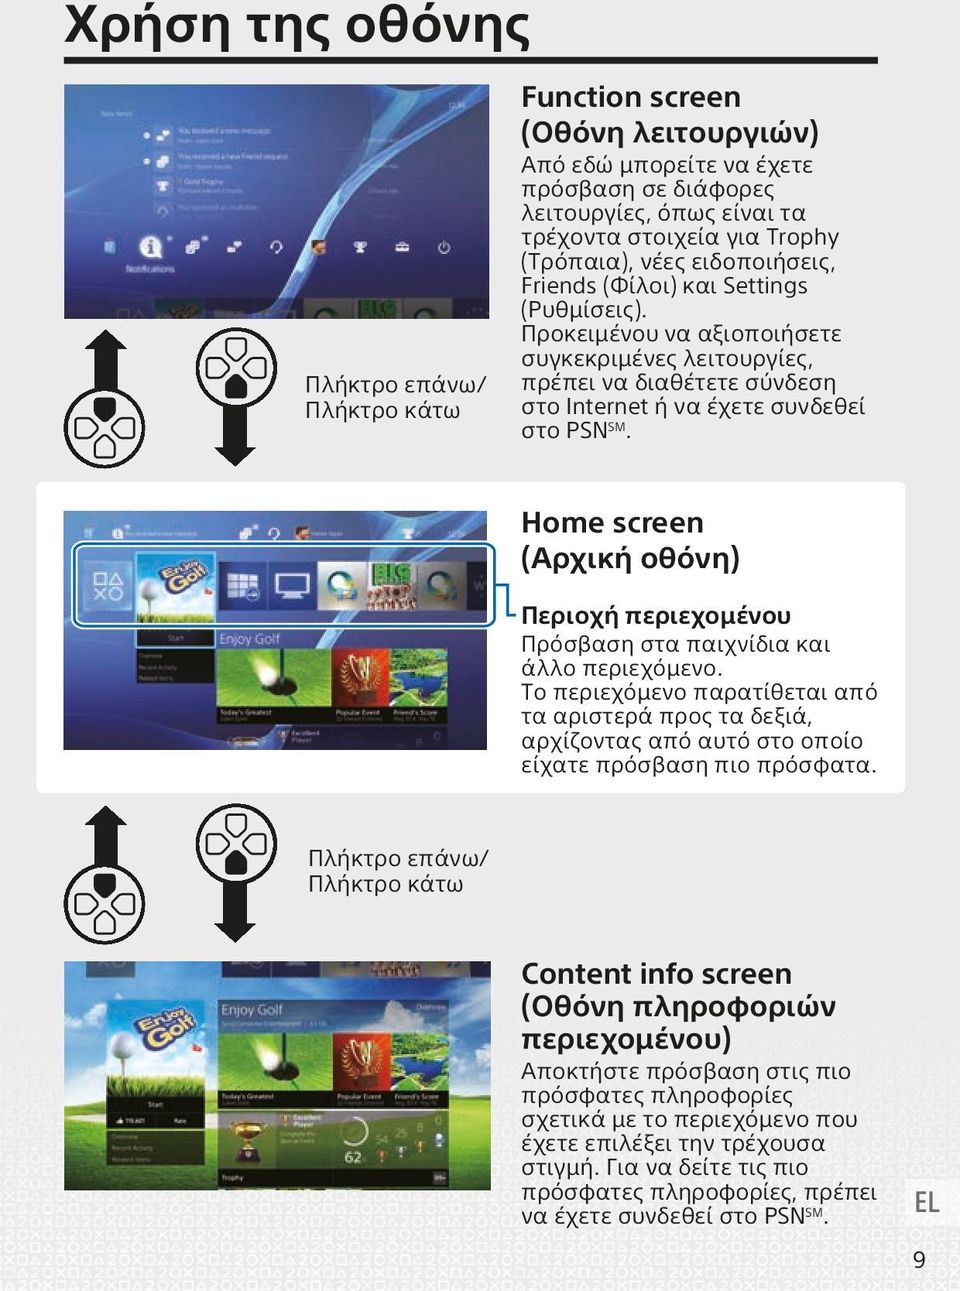 Home screen (Αρχική οθόνη) Περιοχή περιεχομένου Πρόσβαση στα παιχνίδια και άλλο περιεχόμενο.